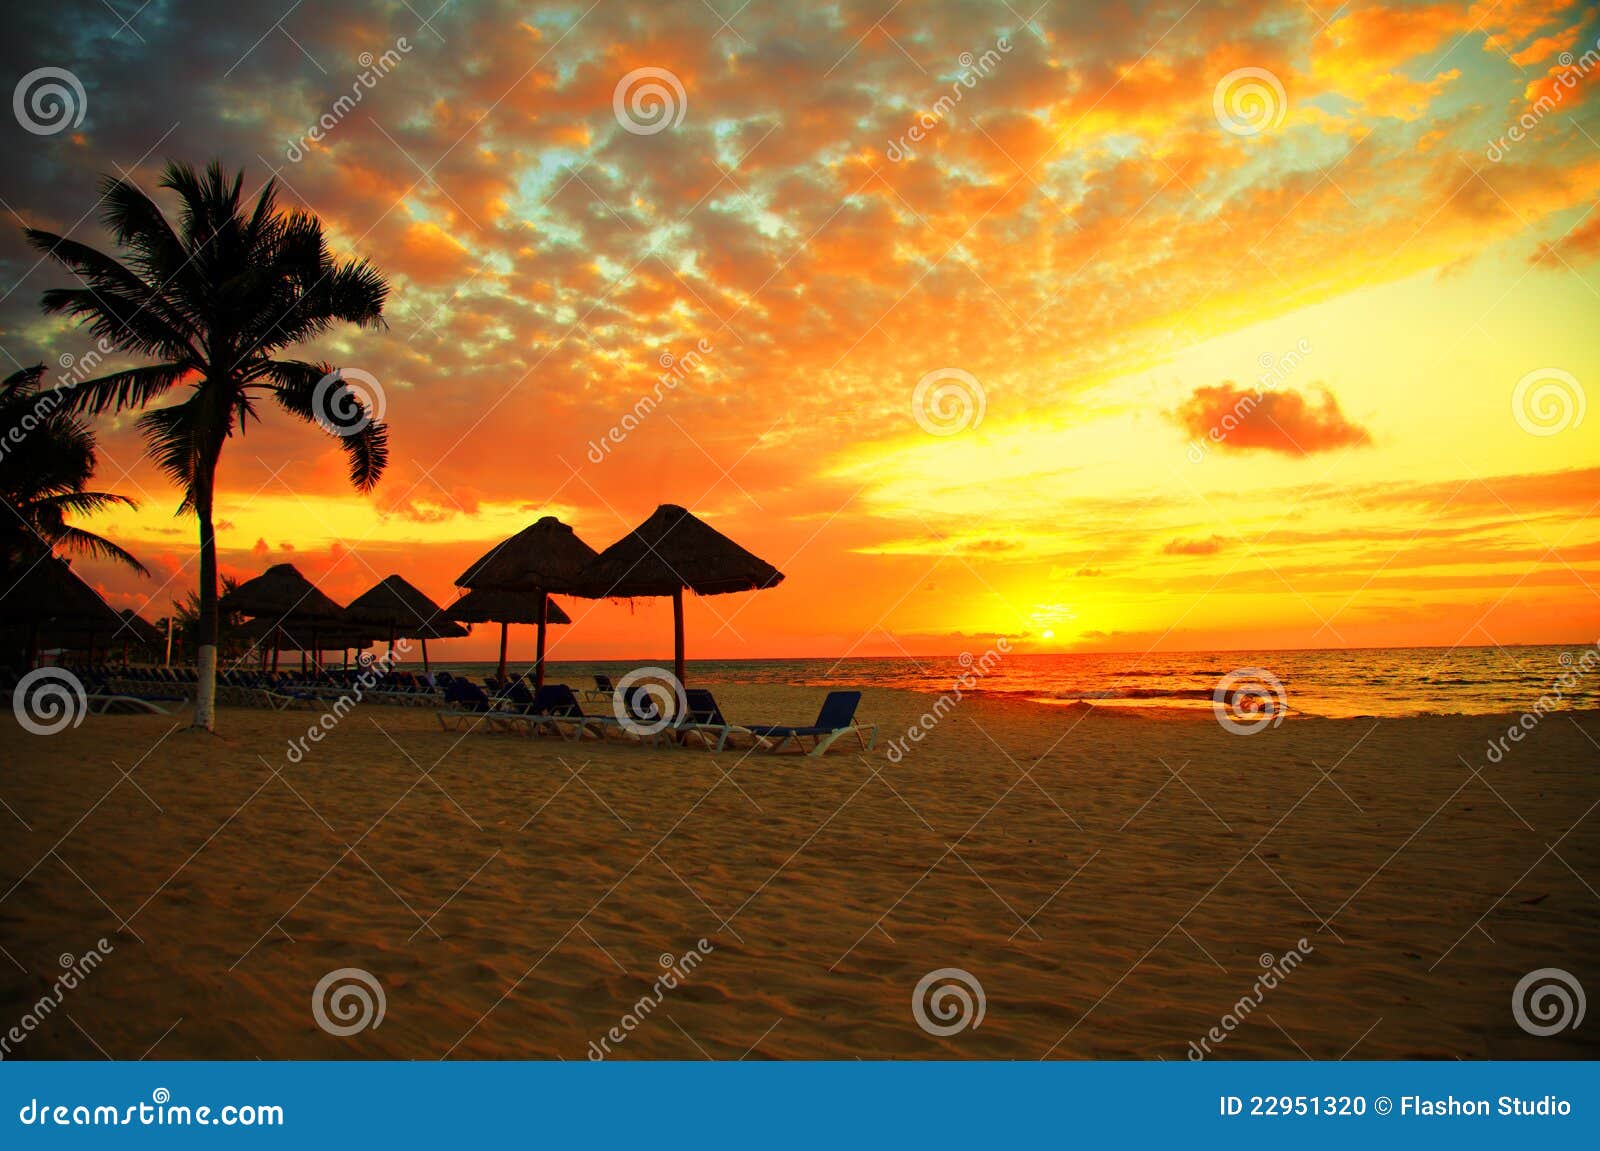 sunset scene at tropical beach resort